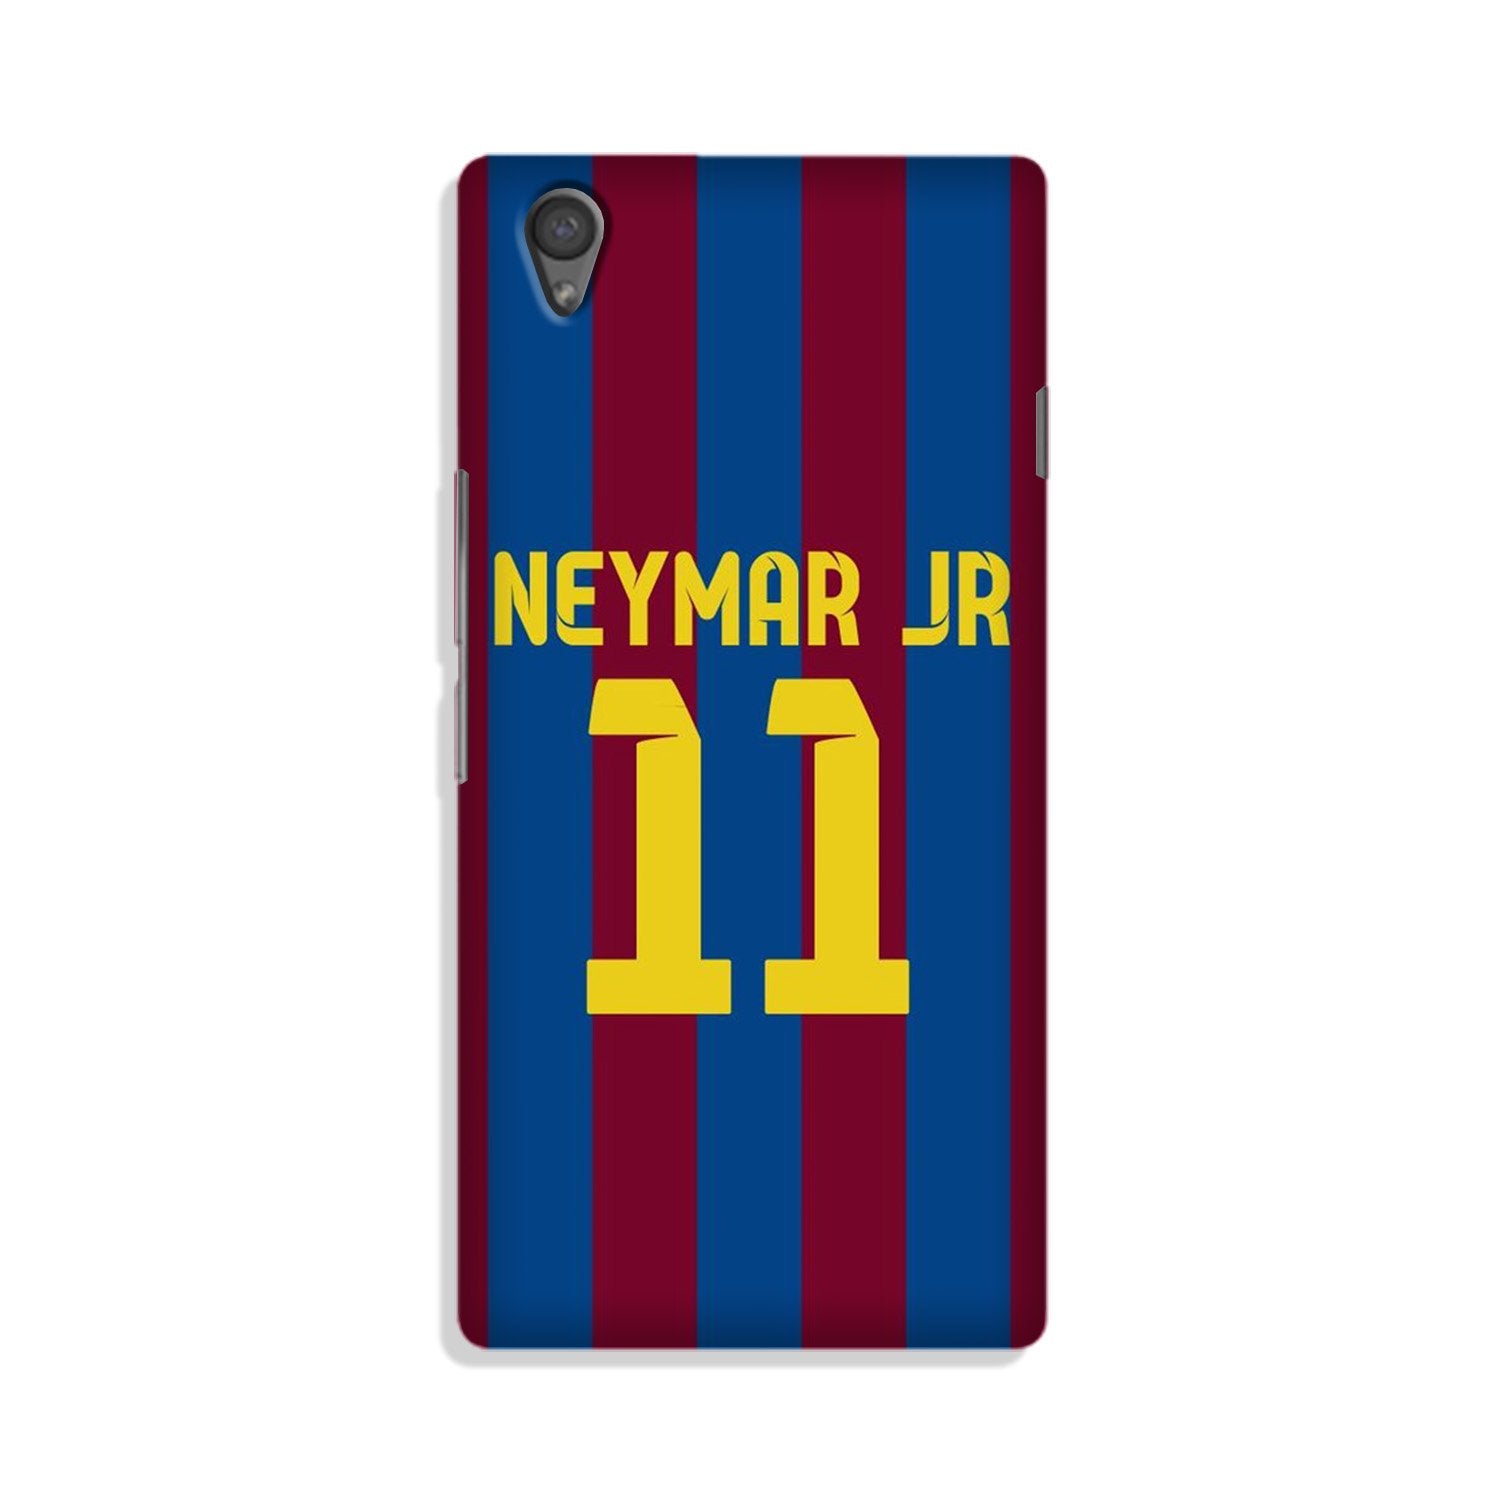 Neymar Jr Case for OnePlus X(Design - 162)